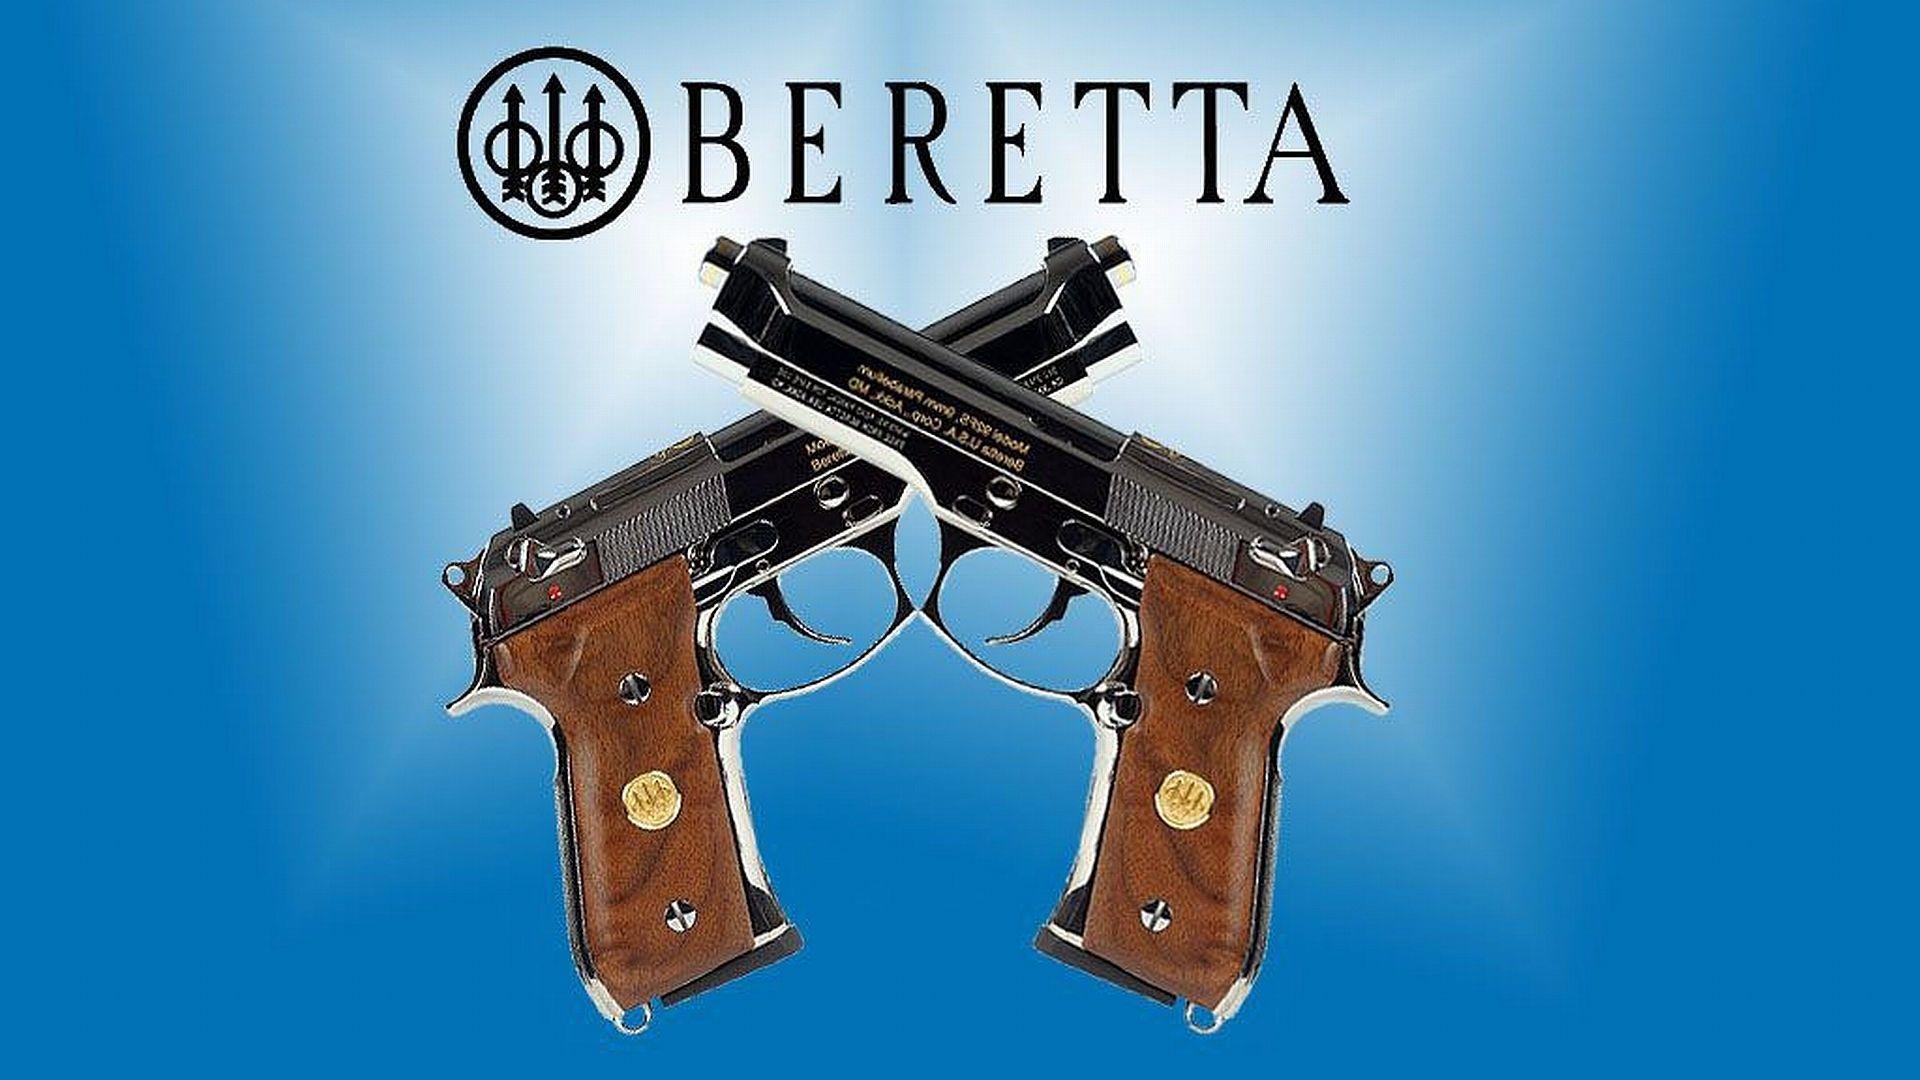 Beretta Pistol Full HD Wallpaper and Background Imagex1080